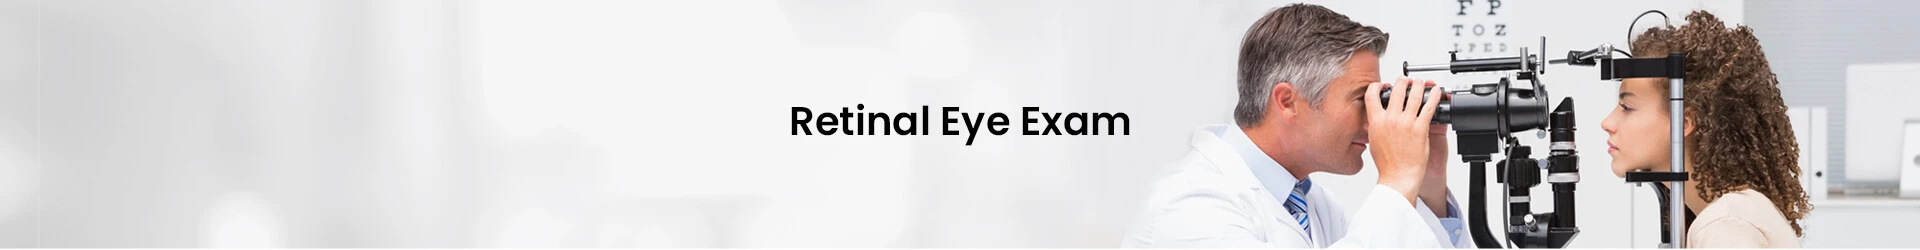 Eyes on brickell: Retinal-Eye-Examination-Miami